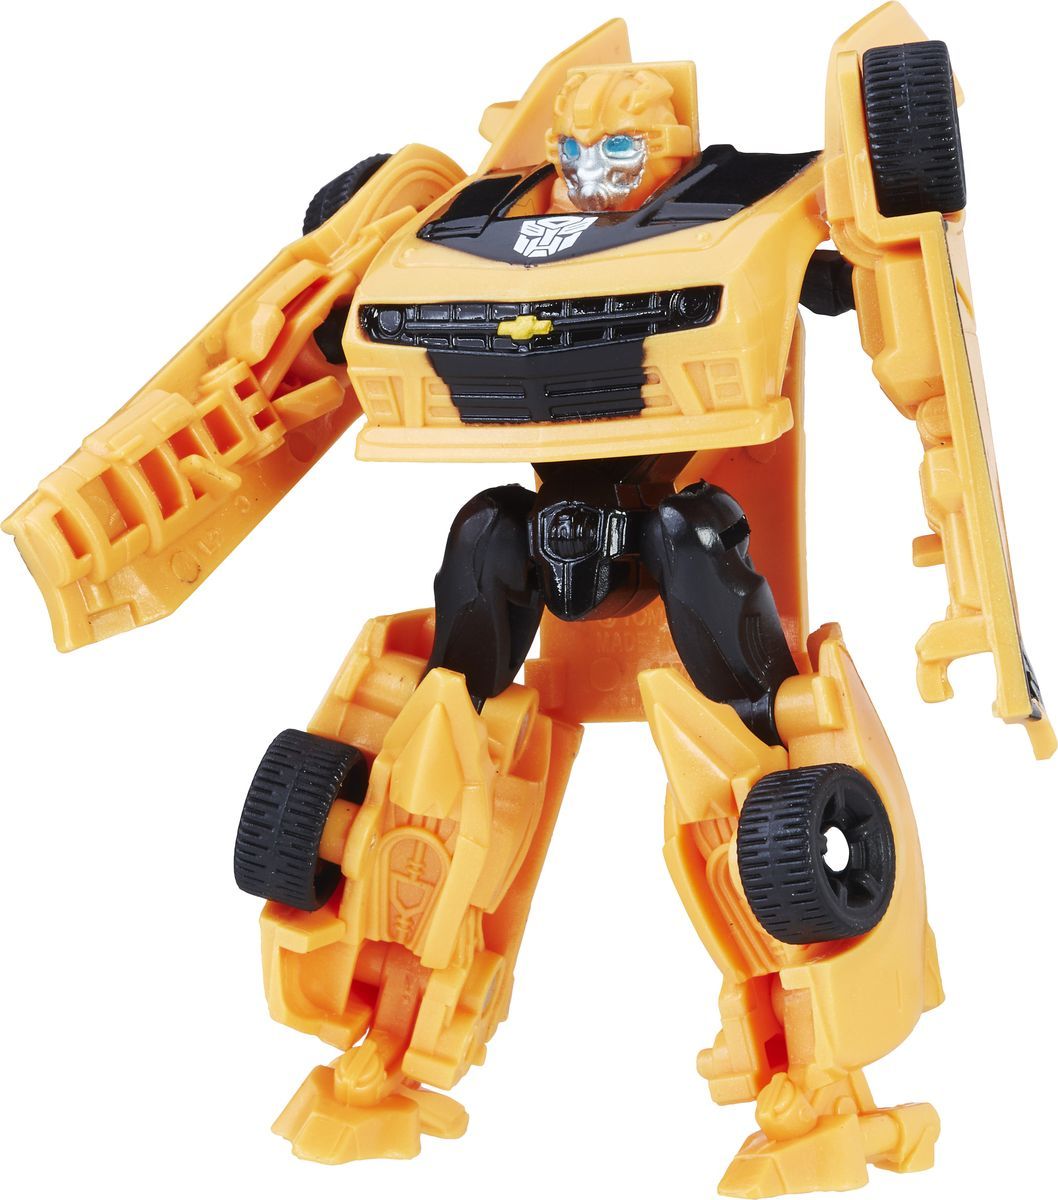 Transformers  Bumblebee